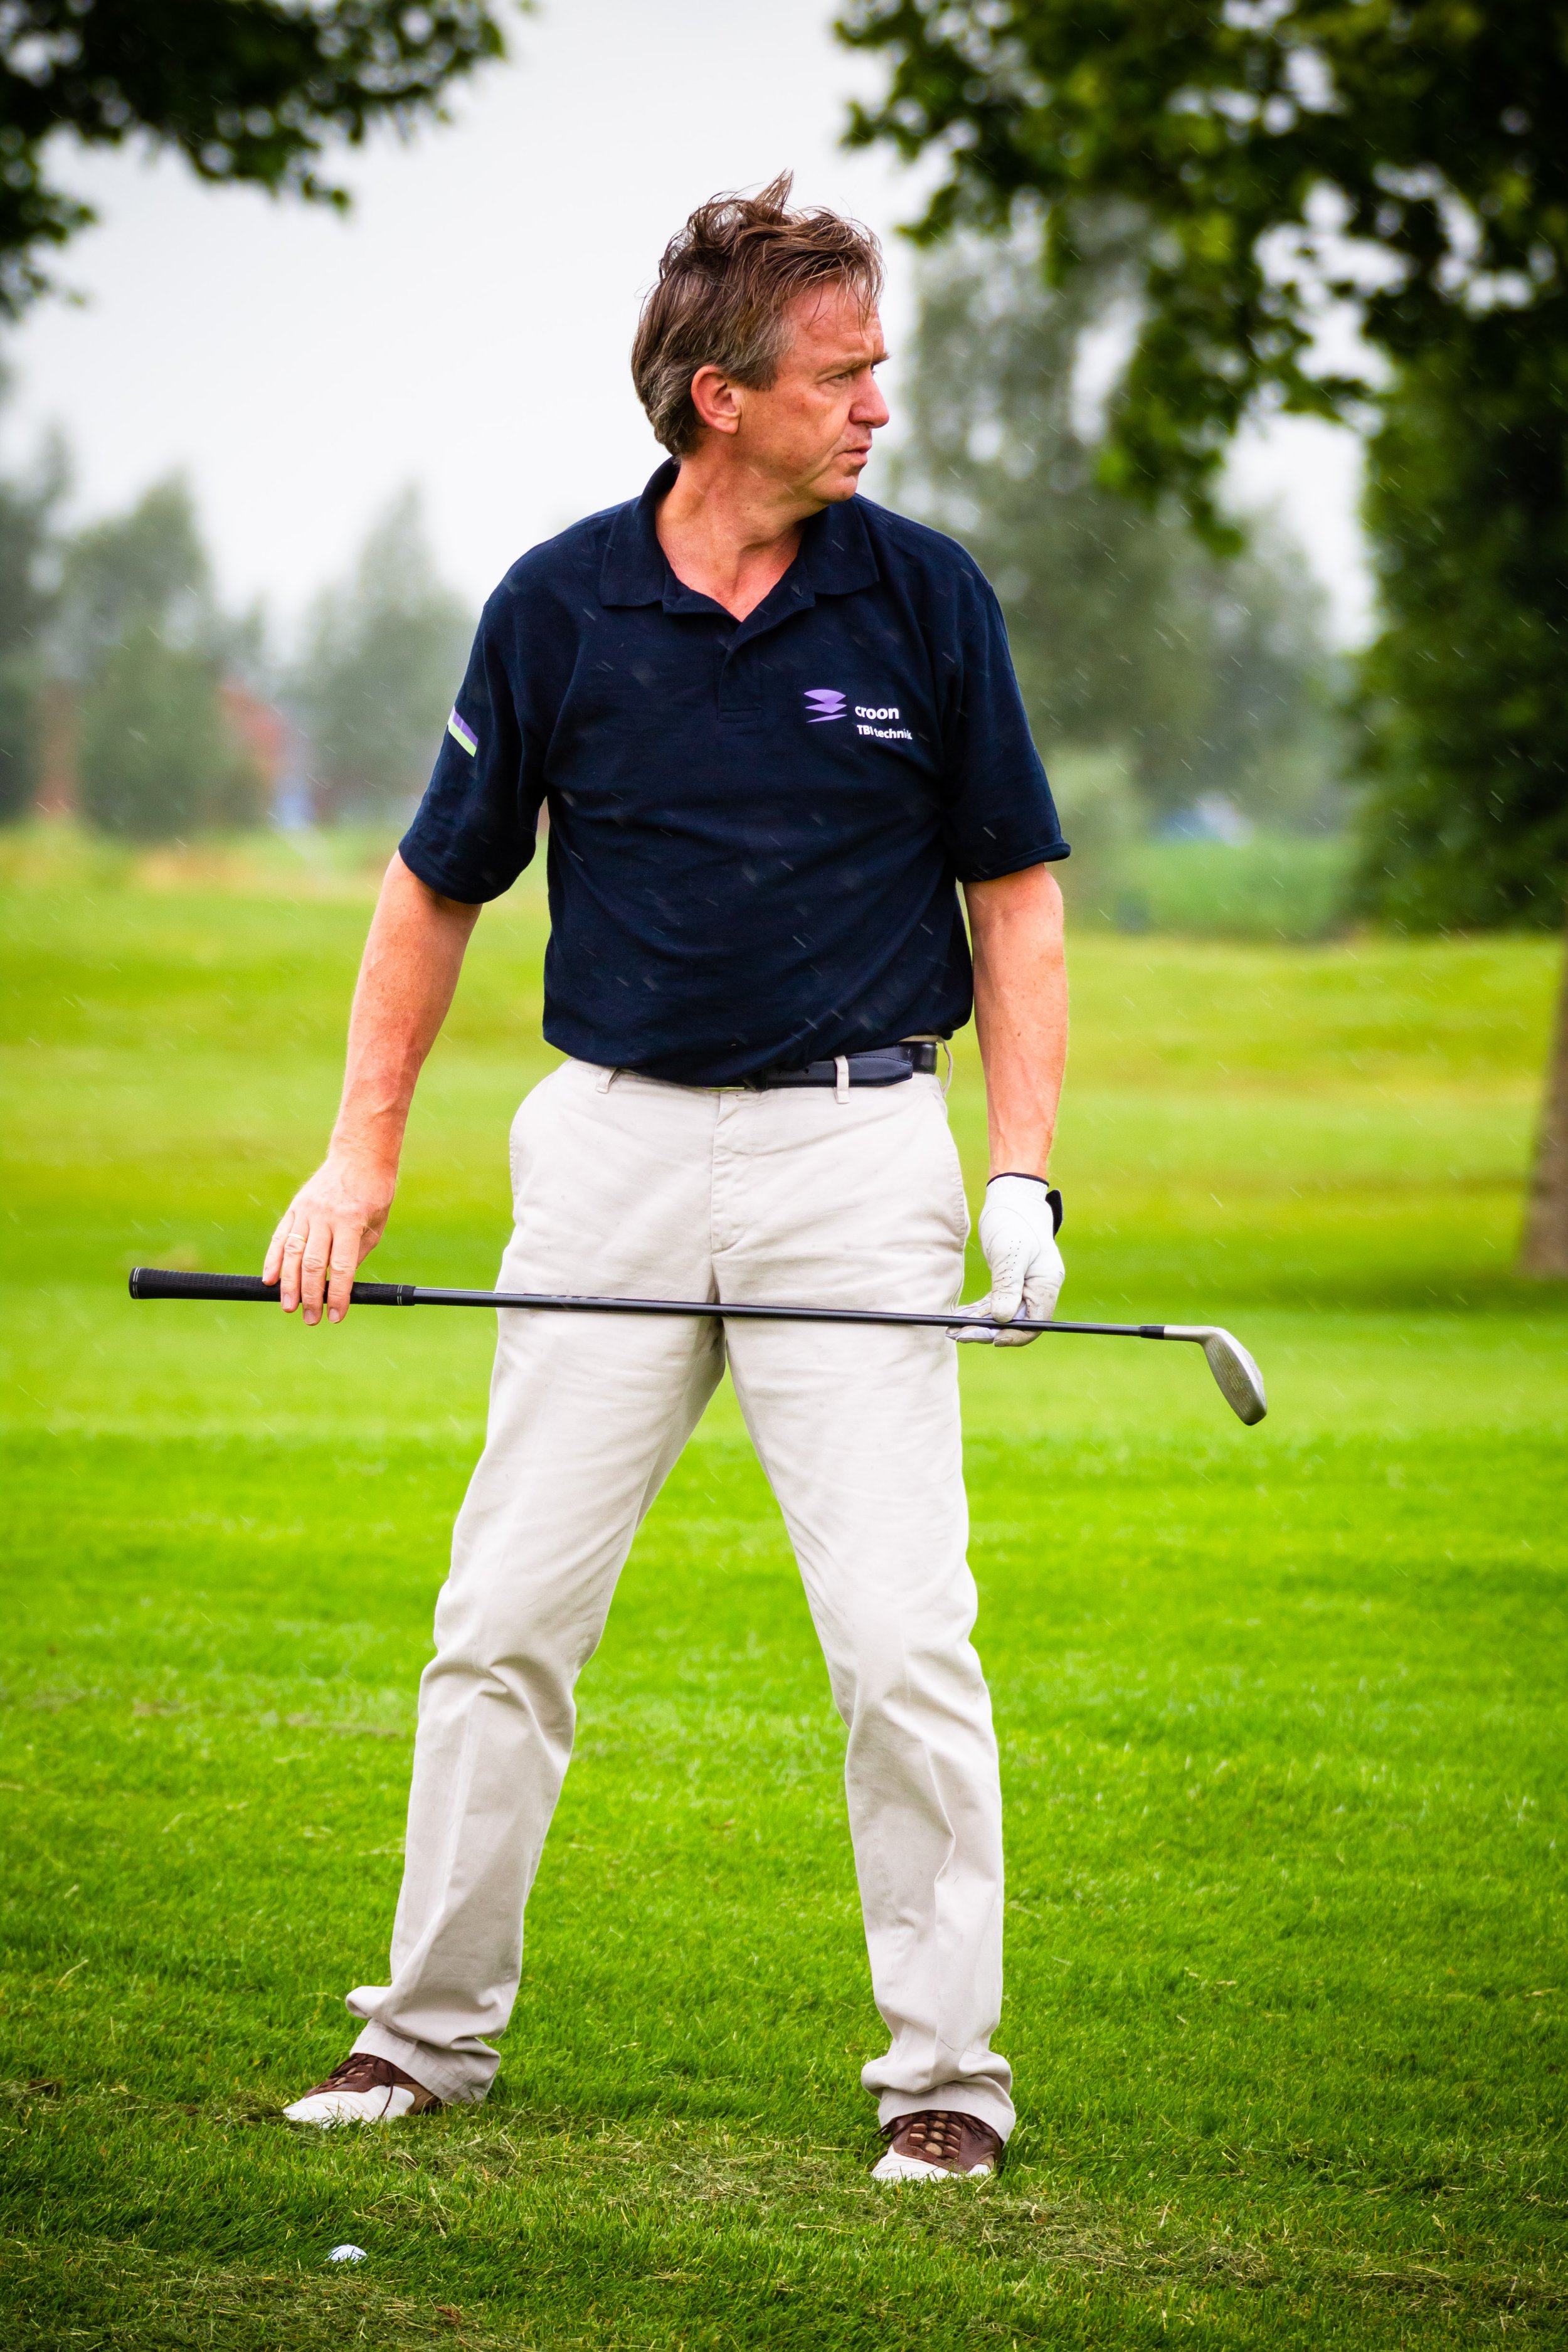 Stefan Segers eventfotografie IHC Merwede Golf toernooi-42.jpg